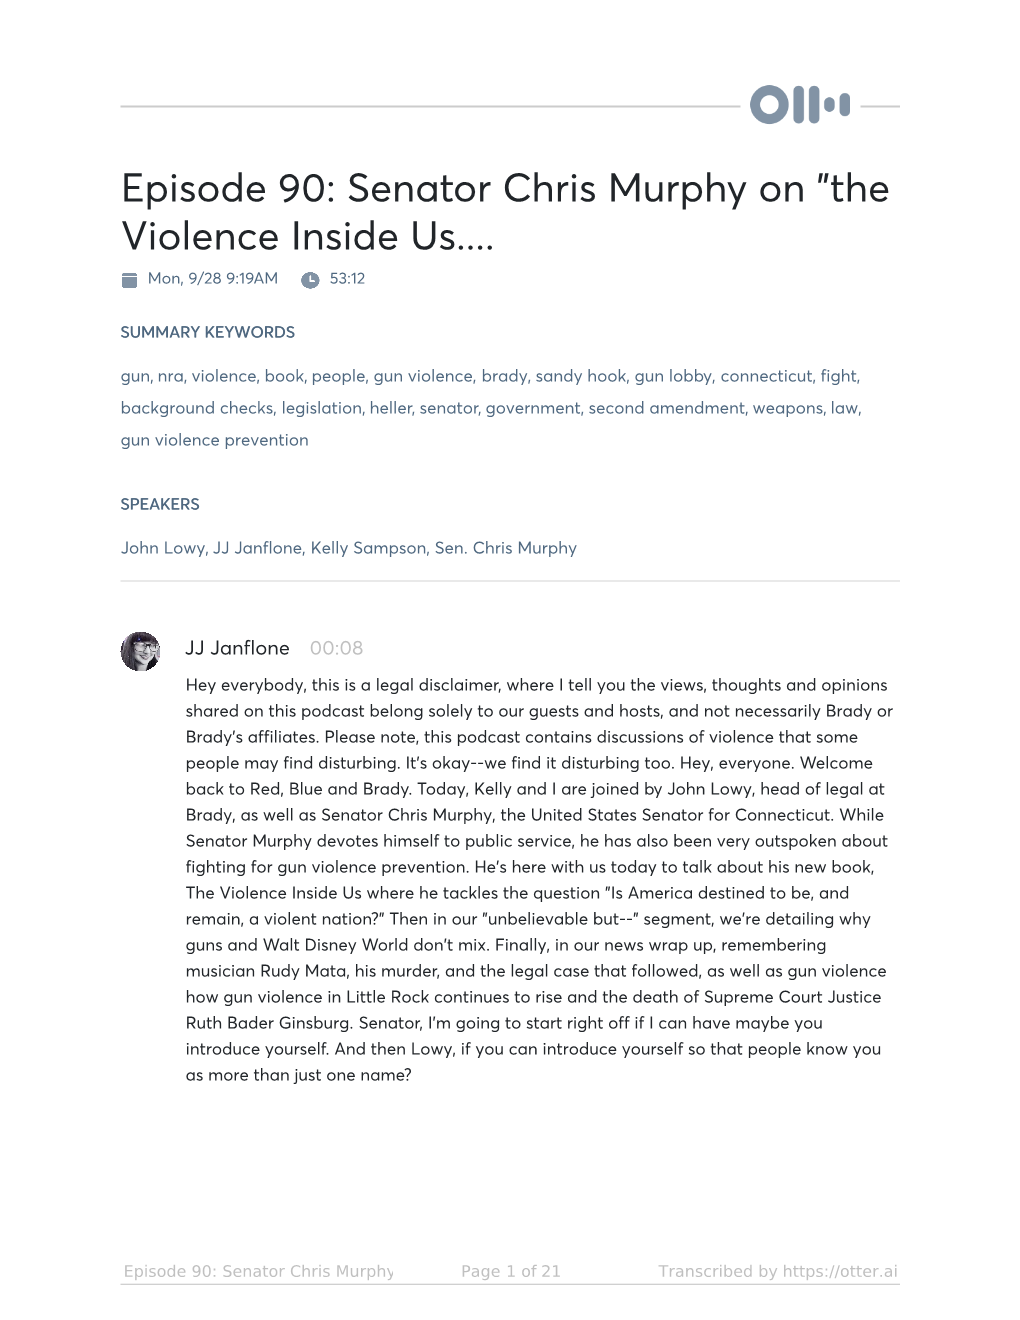 Senator Chris Murphy on "The Violence Inside Us